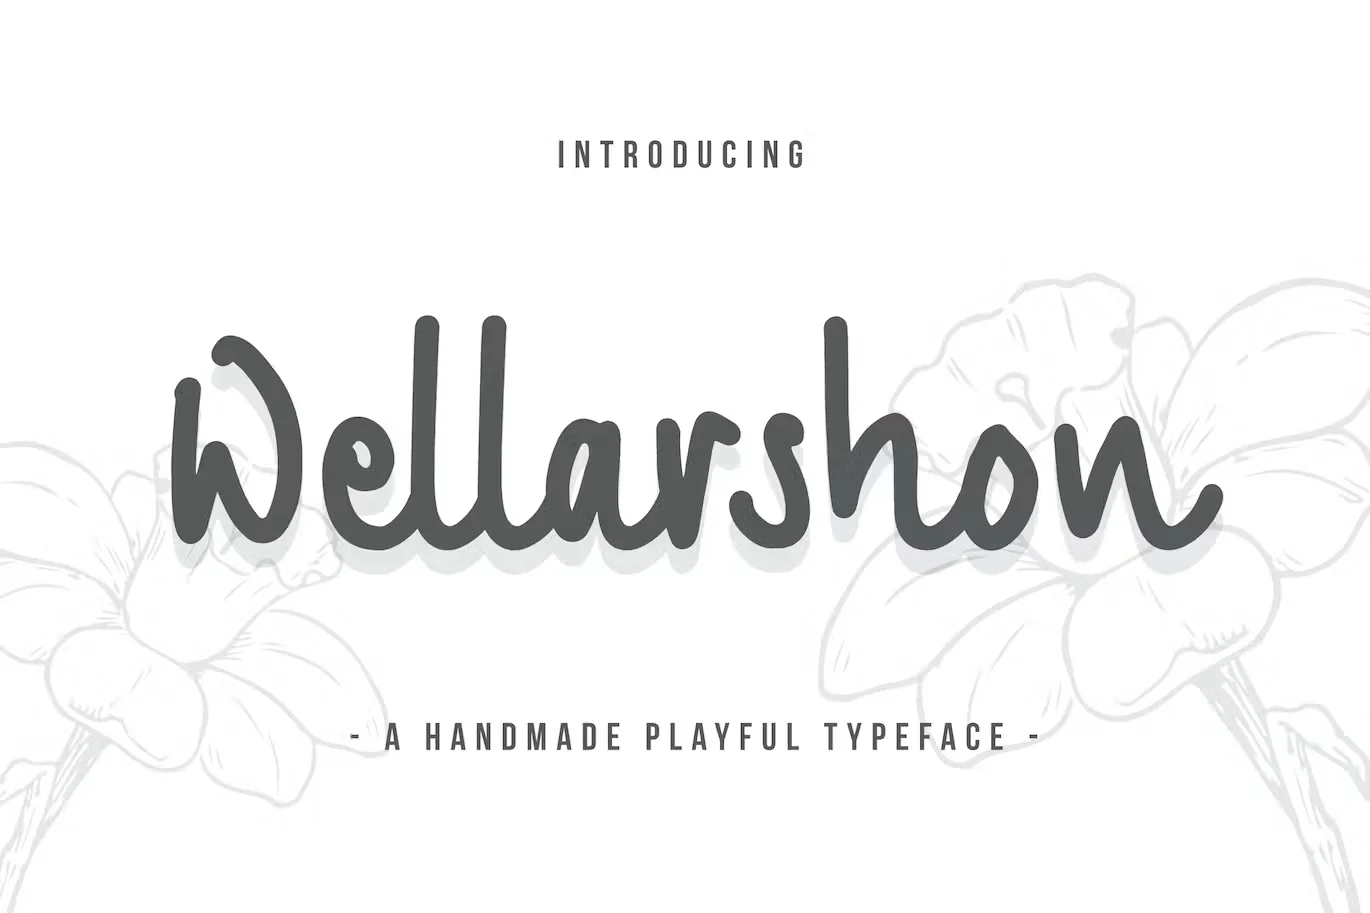 Wellarshon - A Handmade Playful Typeface